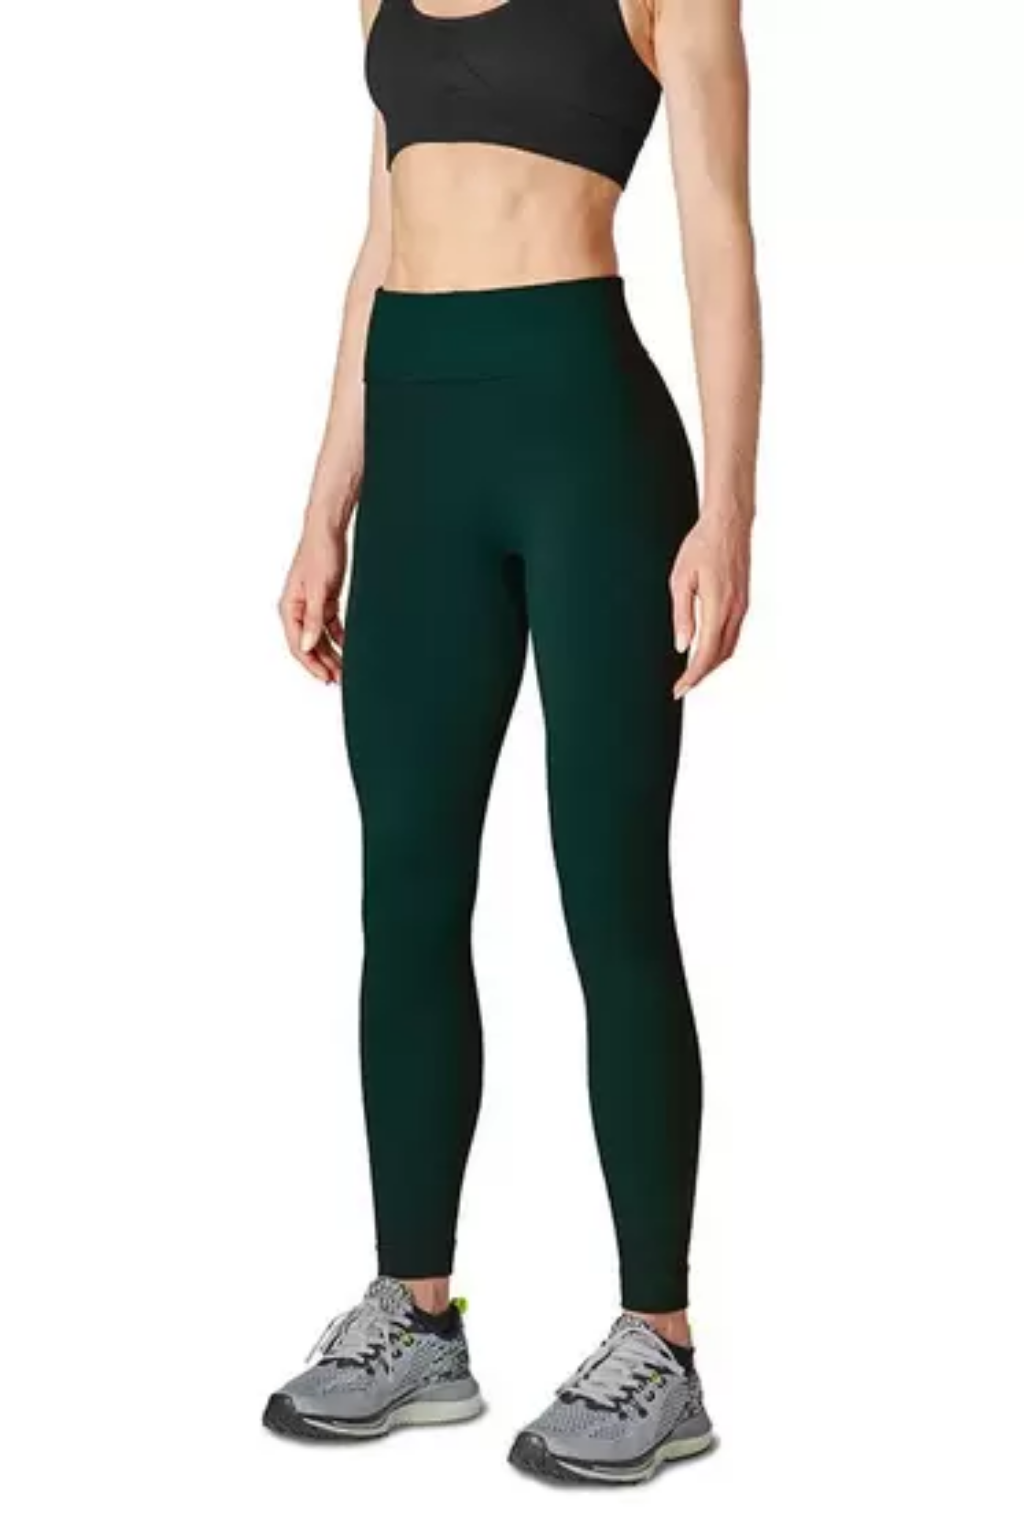 Ribbed Yoga Pants For Women High Waisted Gym Sport Leggings